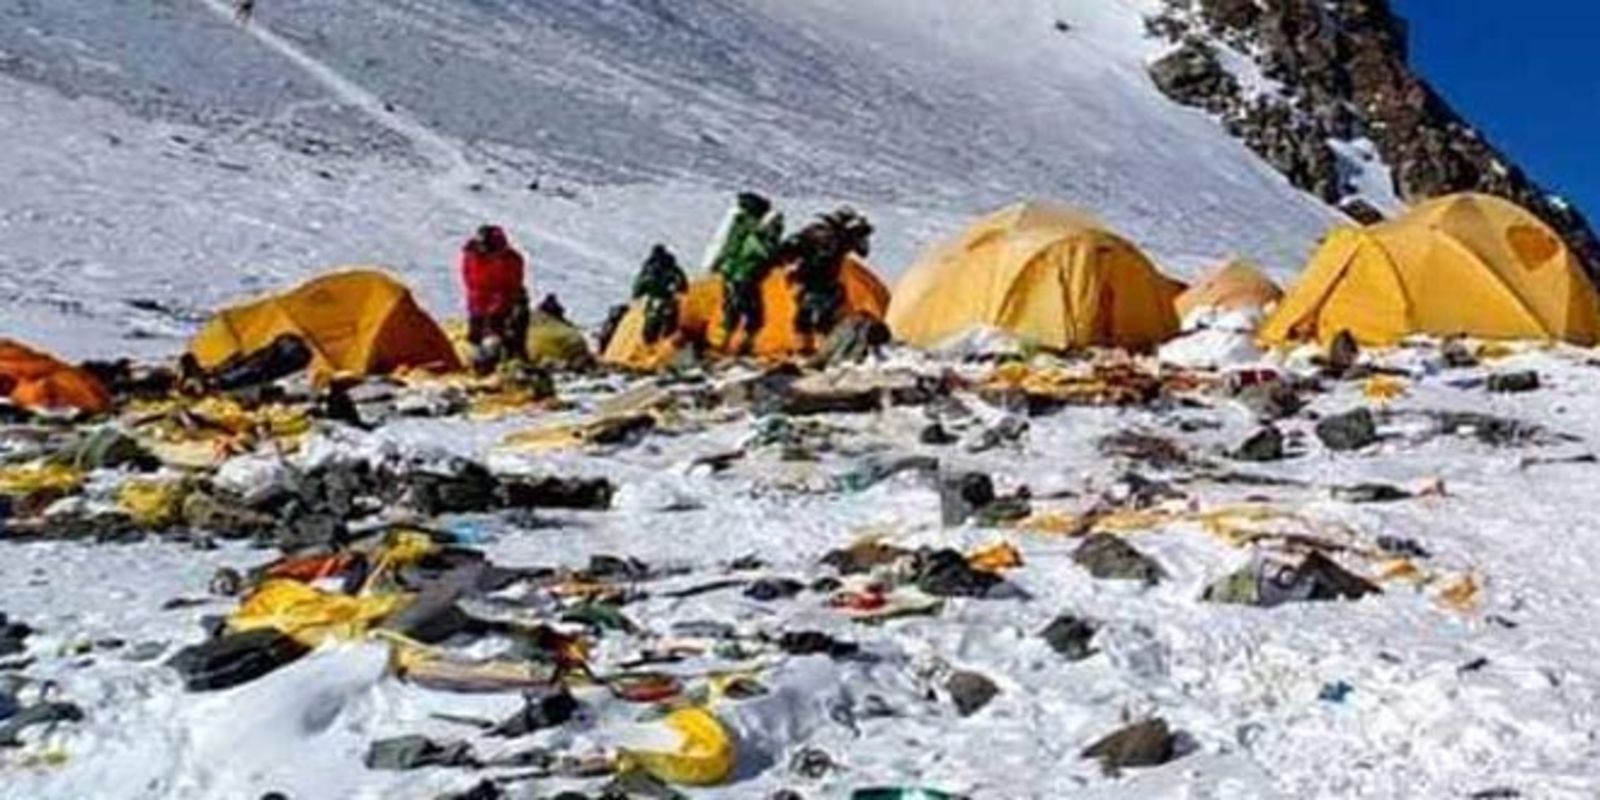 Rubbish on Everest